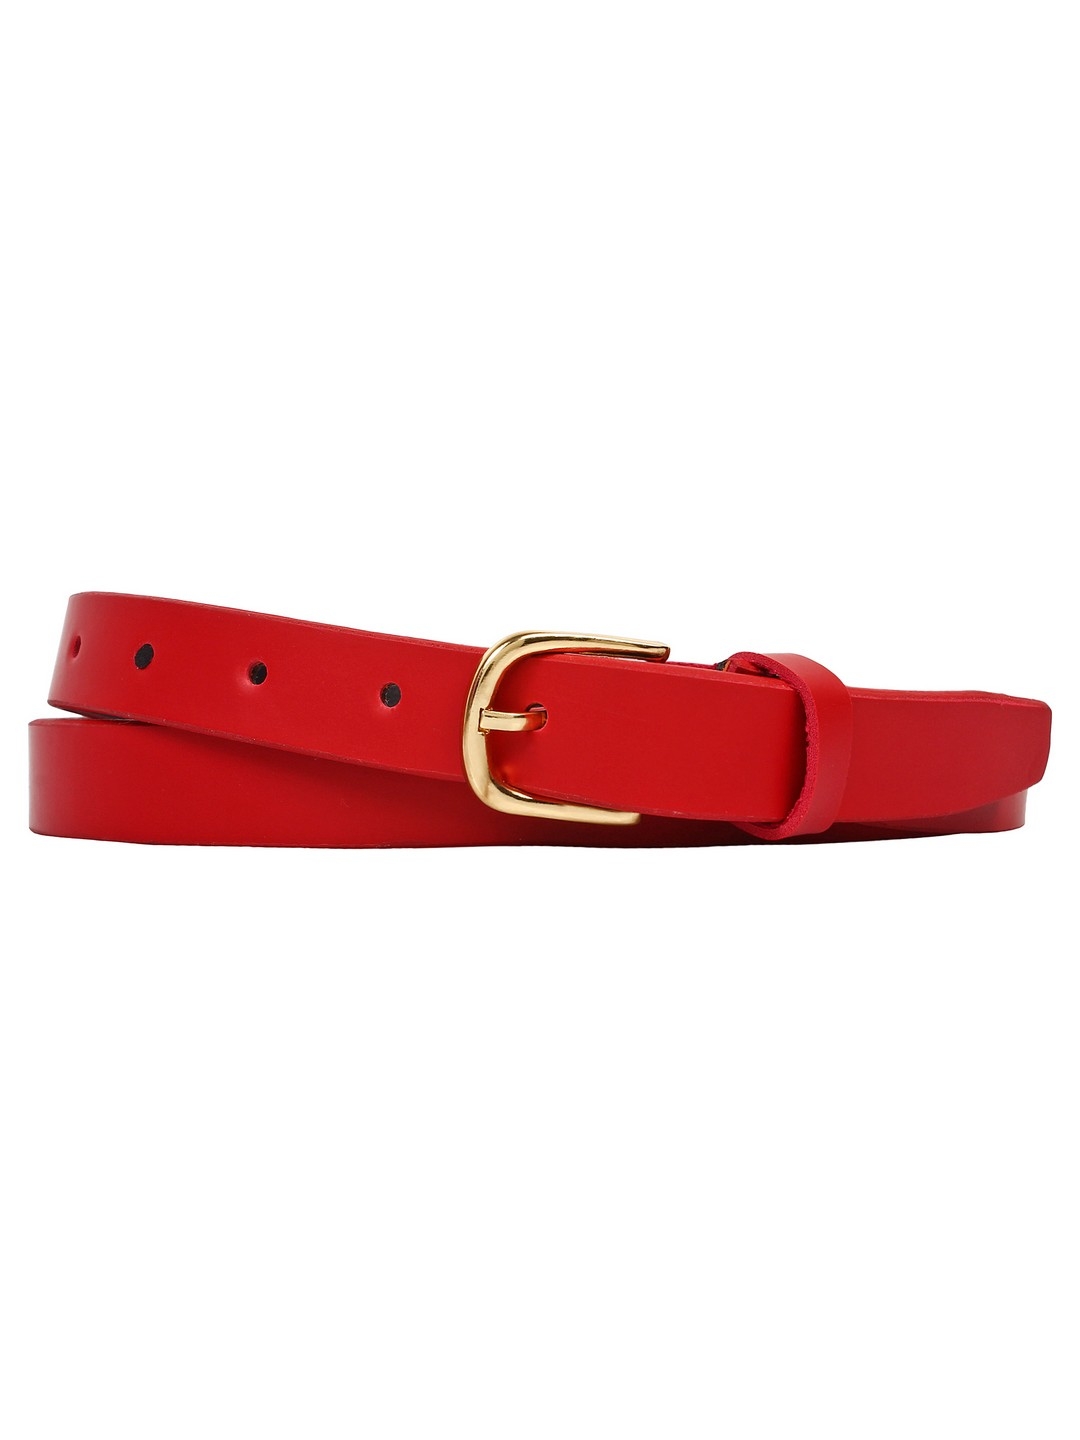 SIDEWOK | Sidewok Women's Vegan Leather Belt - Red